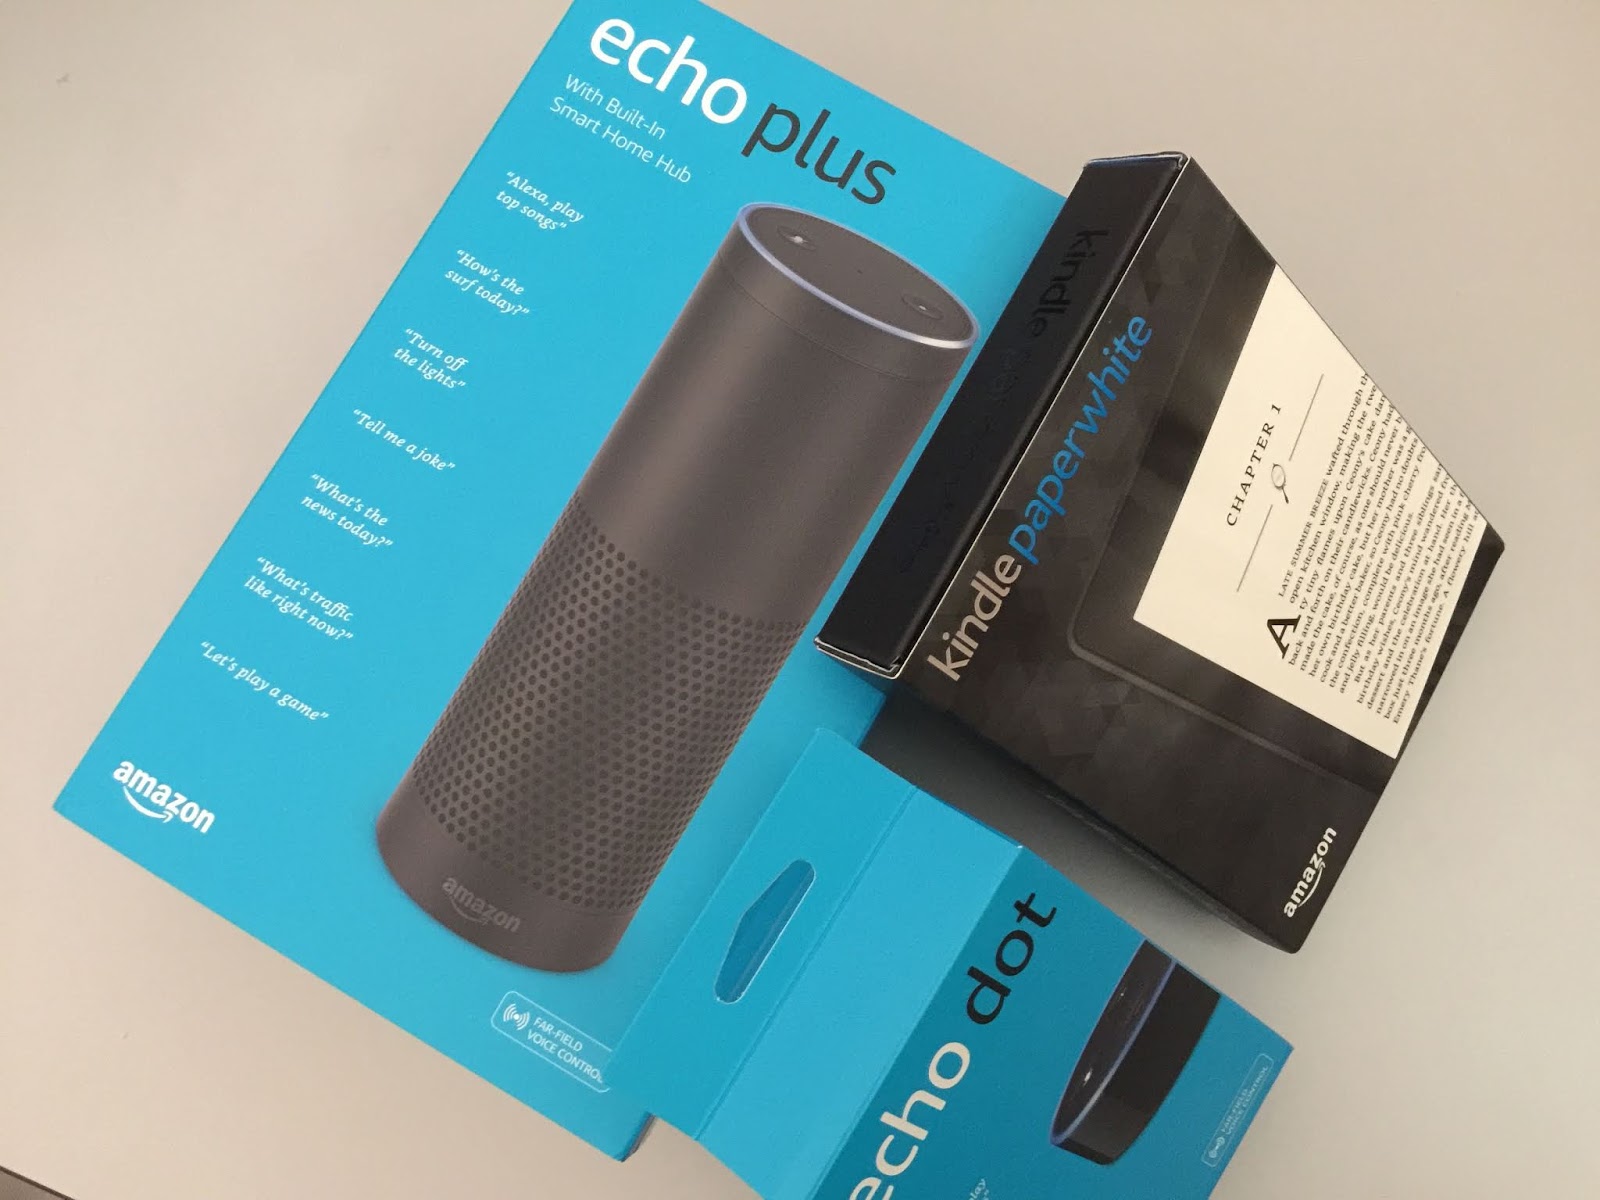 Pot folosi Amazon Echo în Malaezia?